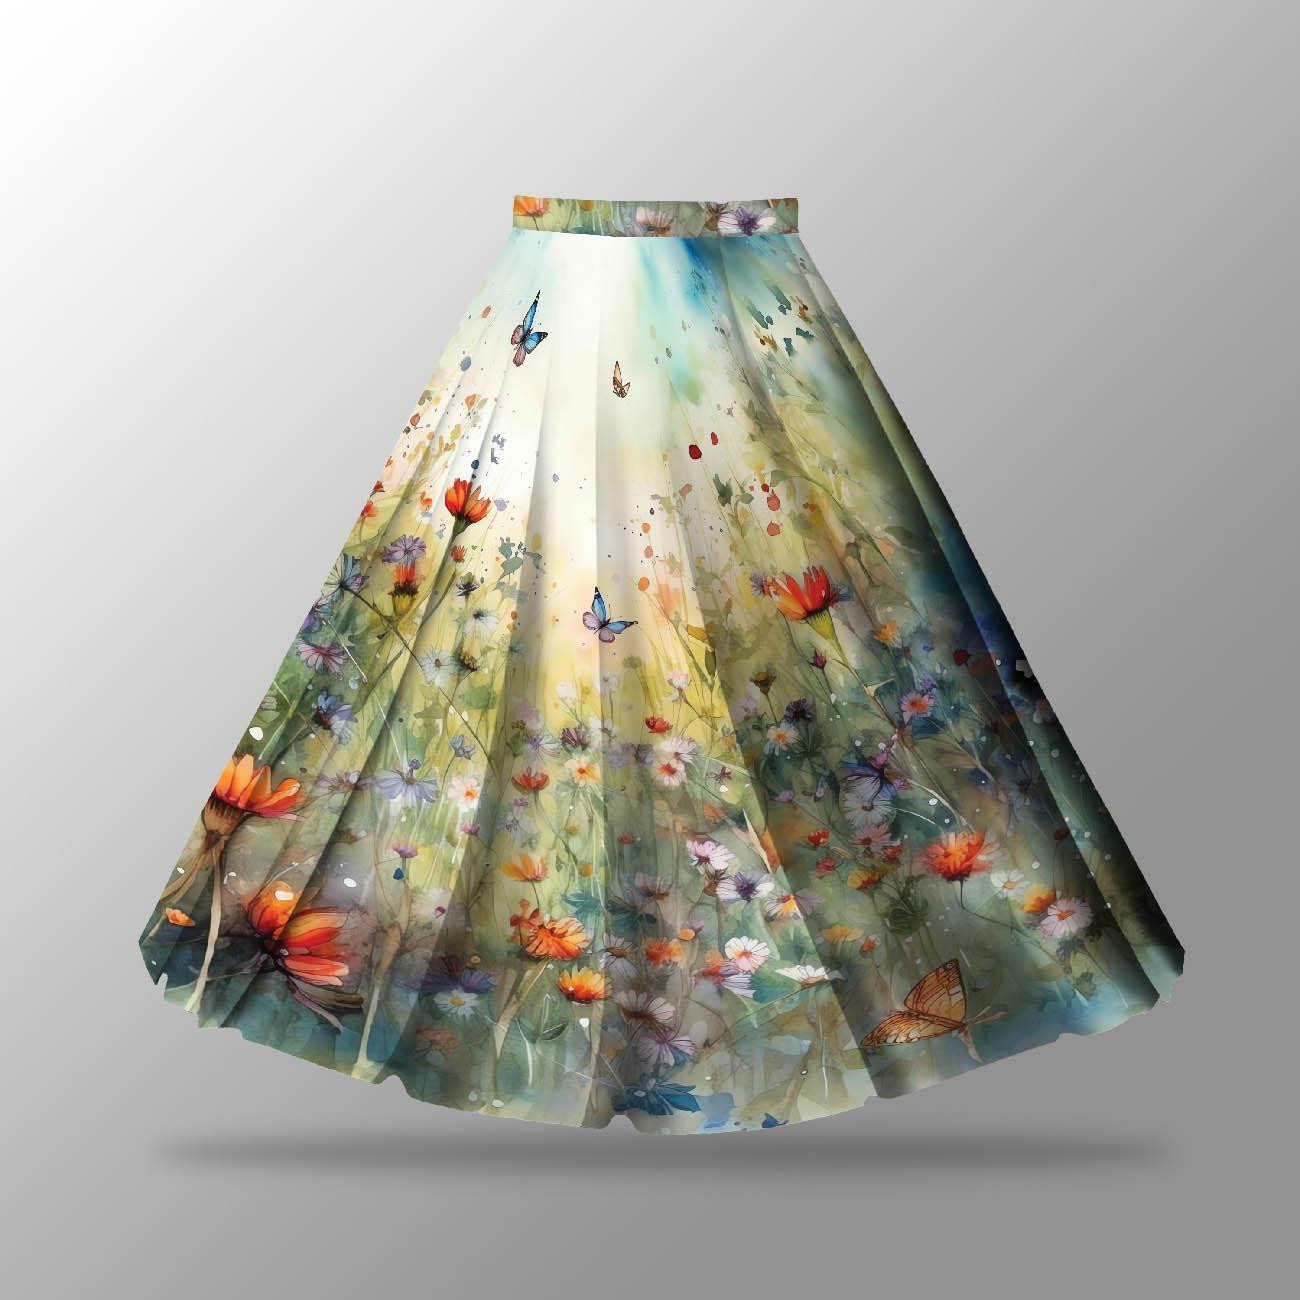 MAGIC MEADOW - skirt panel "MAXI"